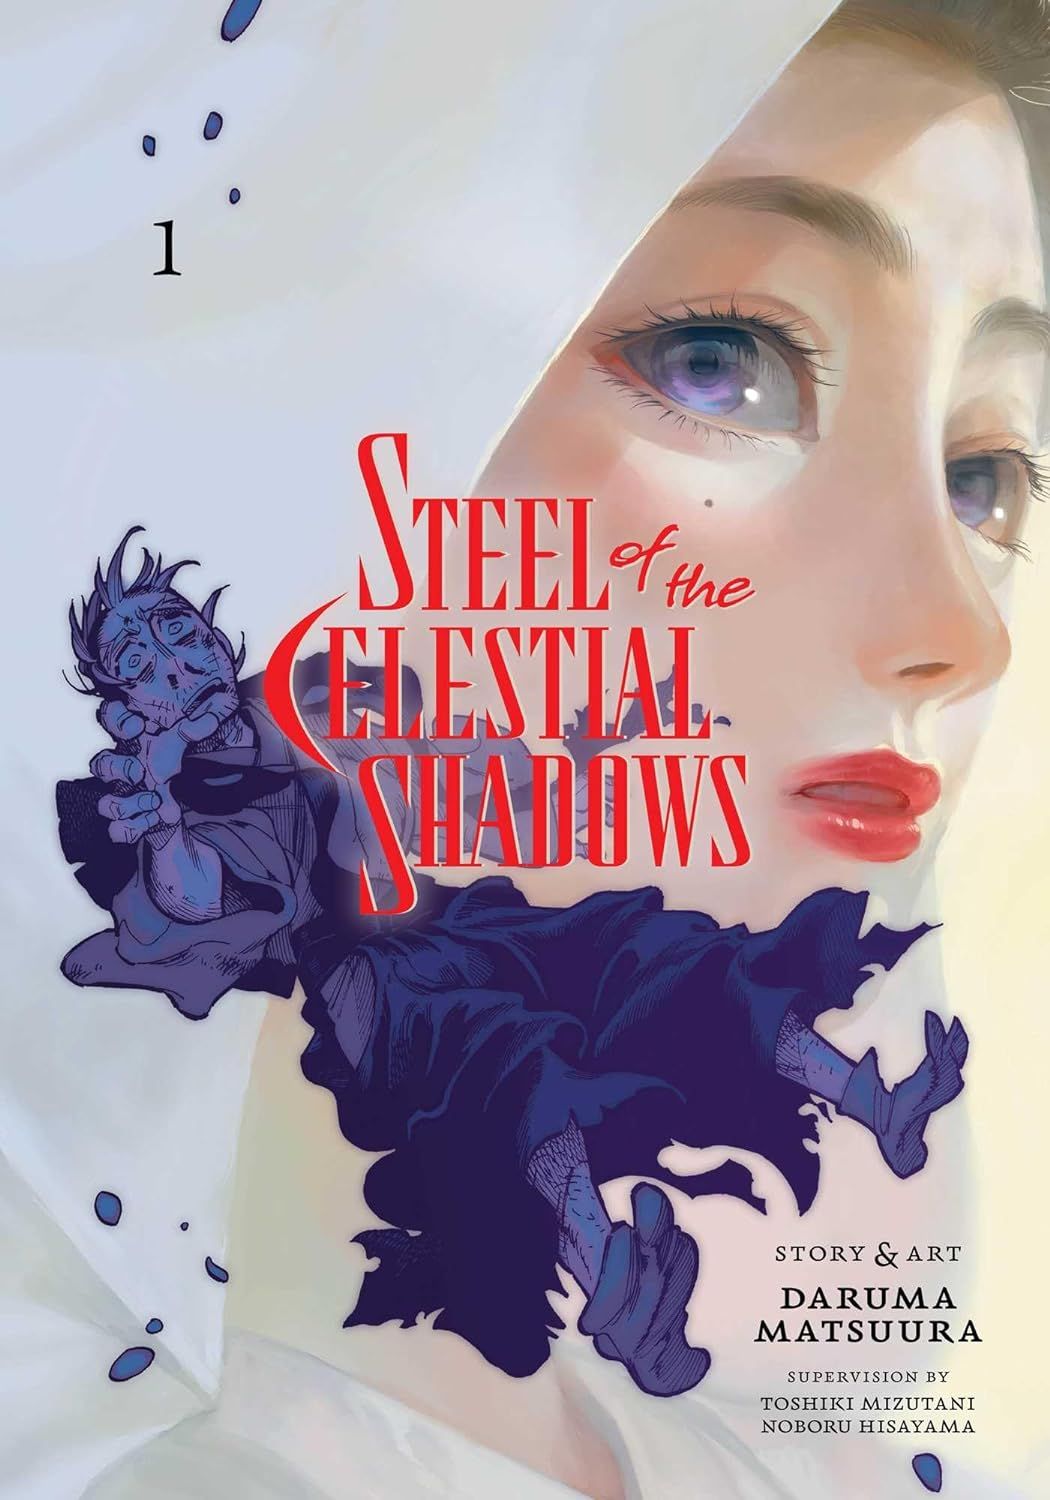 Steel of the Celestial Shadows by Daruma Matsuura cover